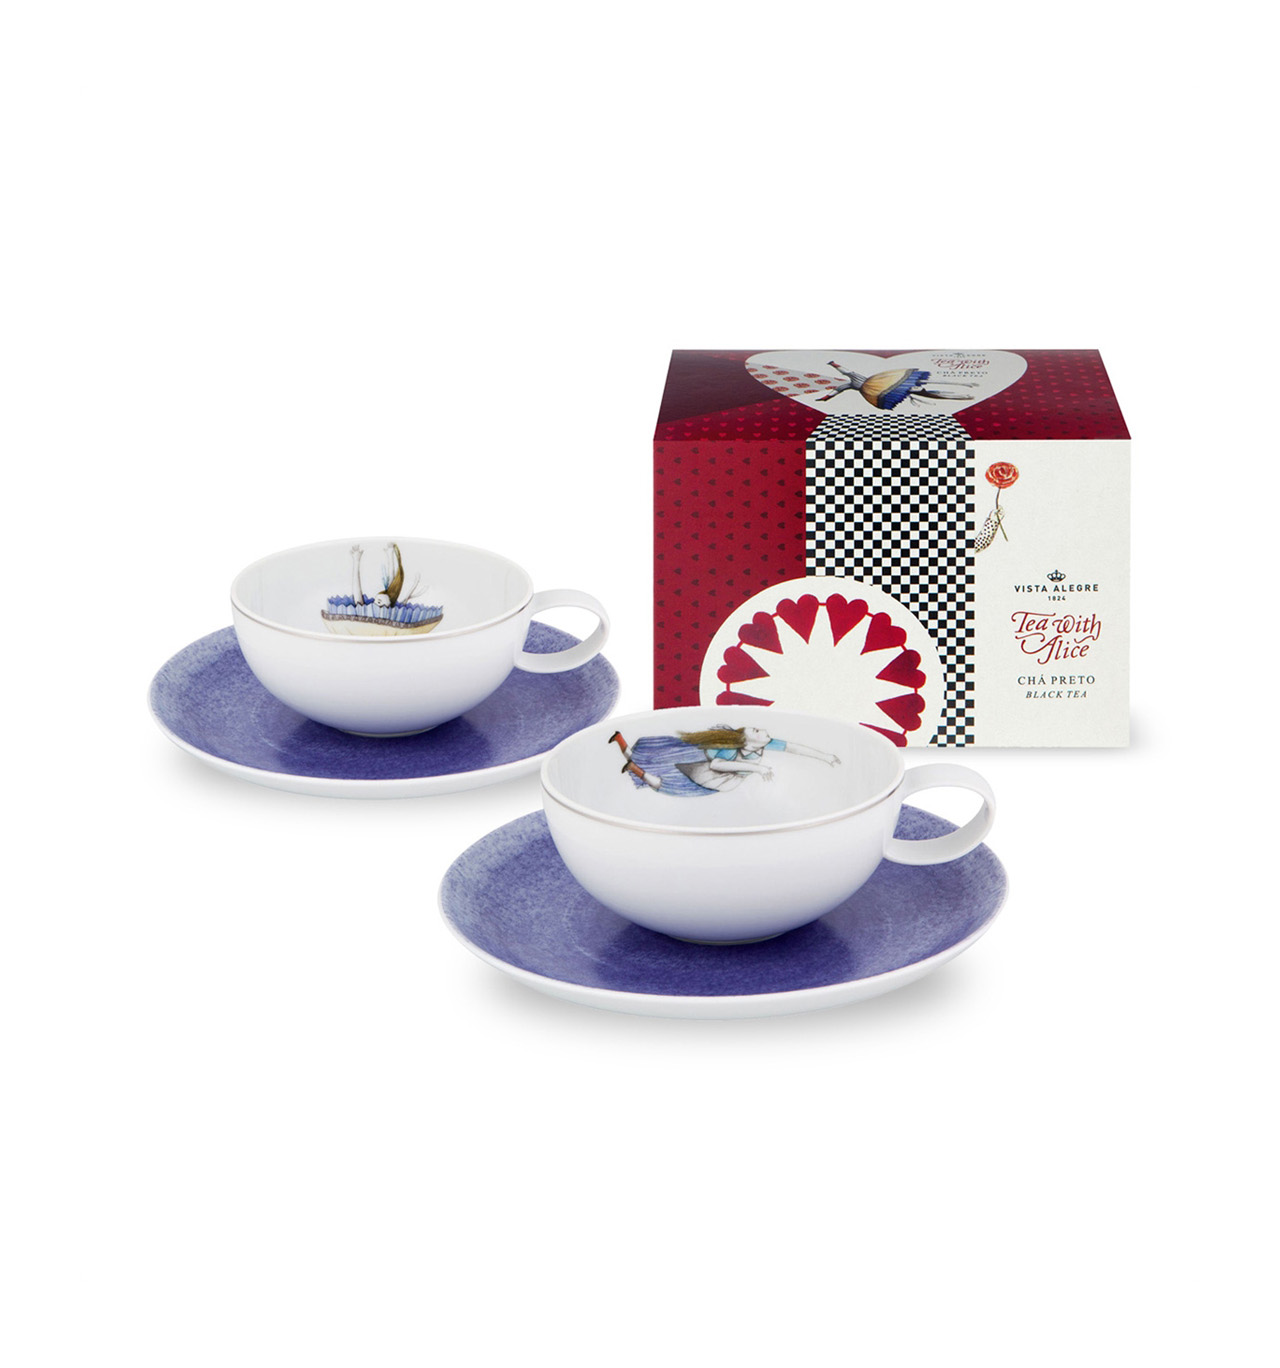 Vista Alegre Collection Tea with Alice Set 2 Teacups and Saucers